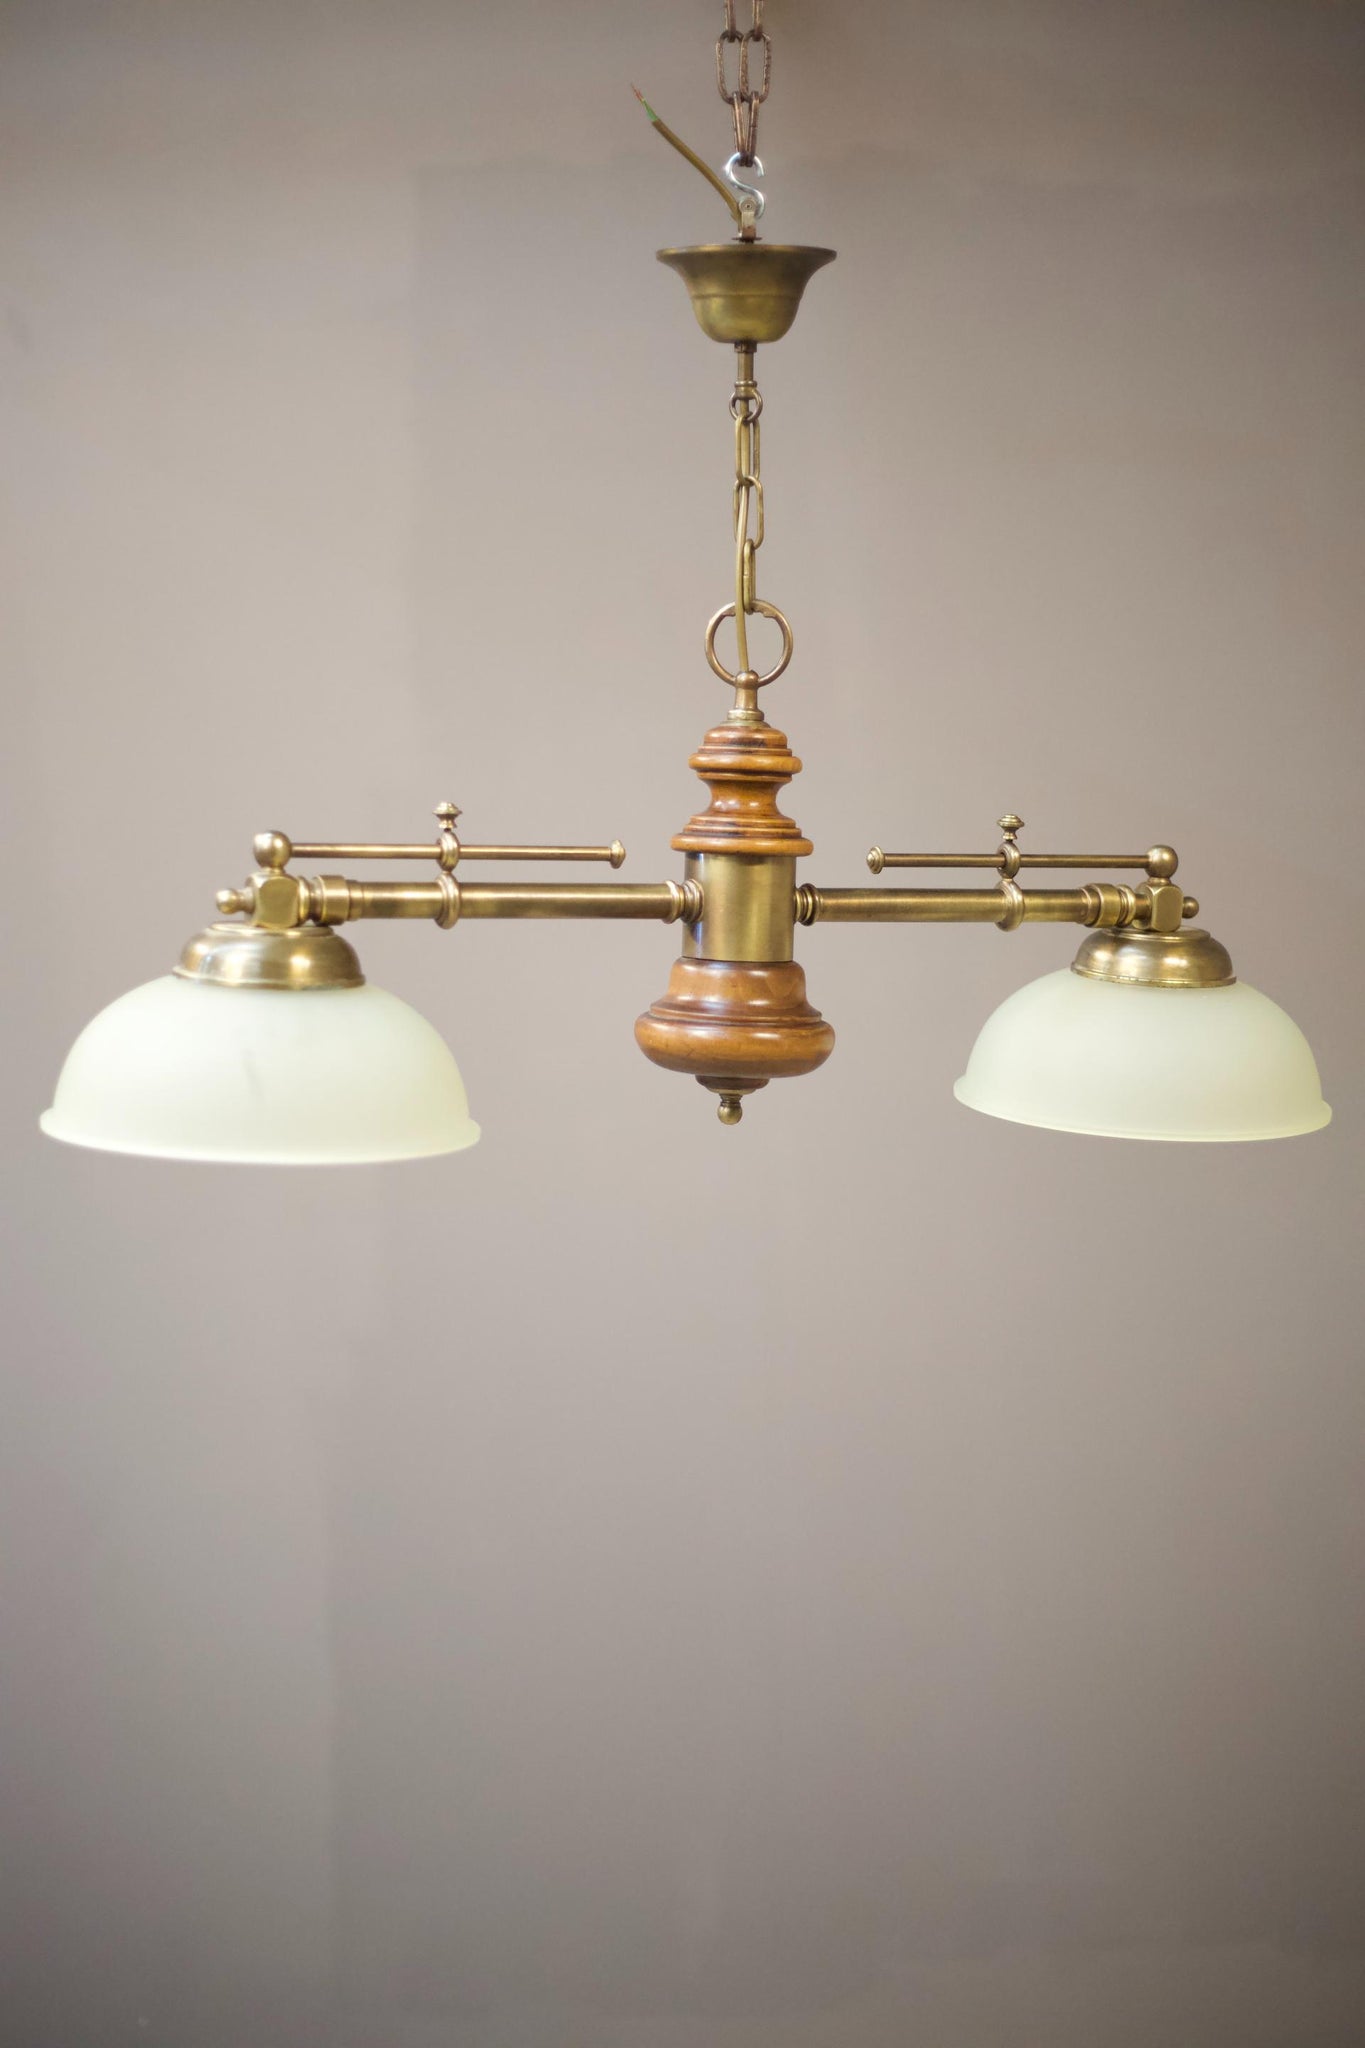 Mid 20th century walnut and brass ceiling light